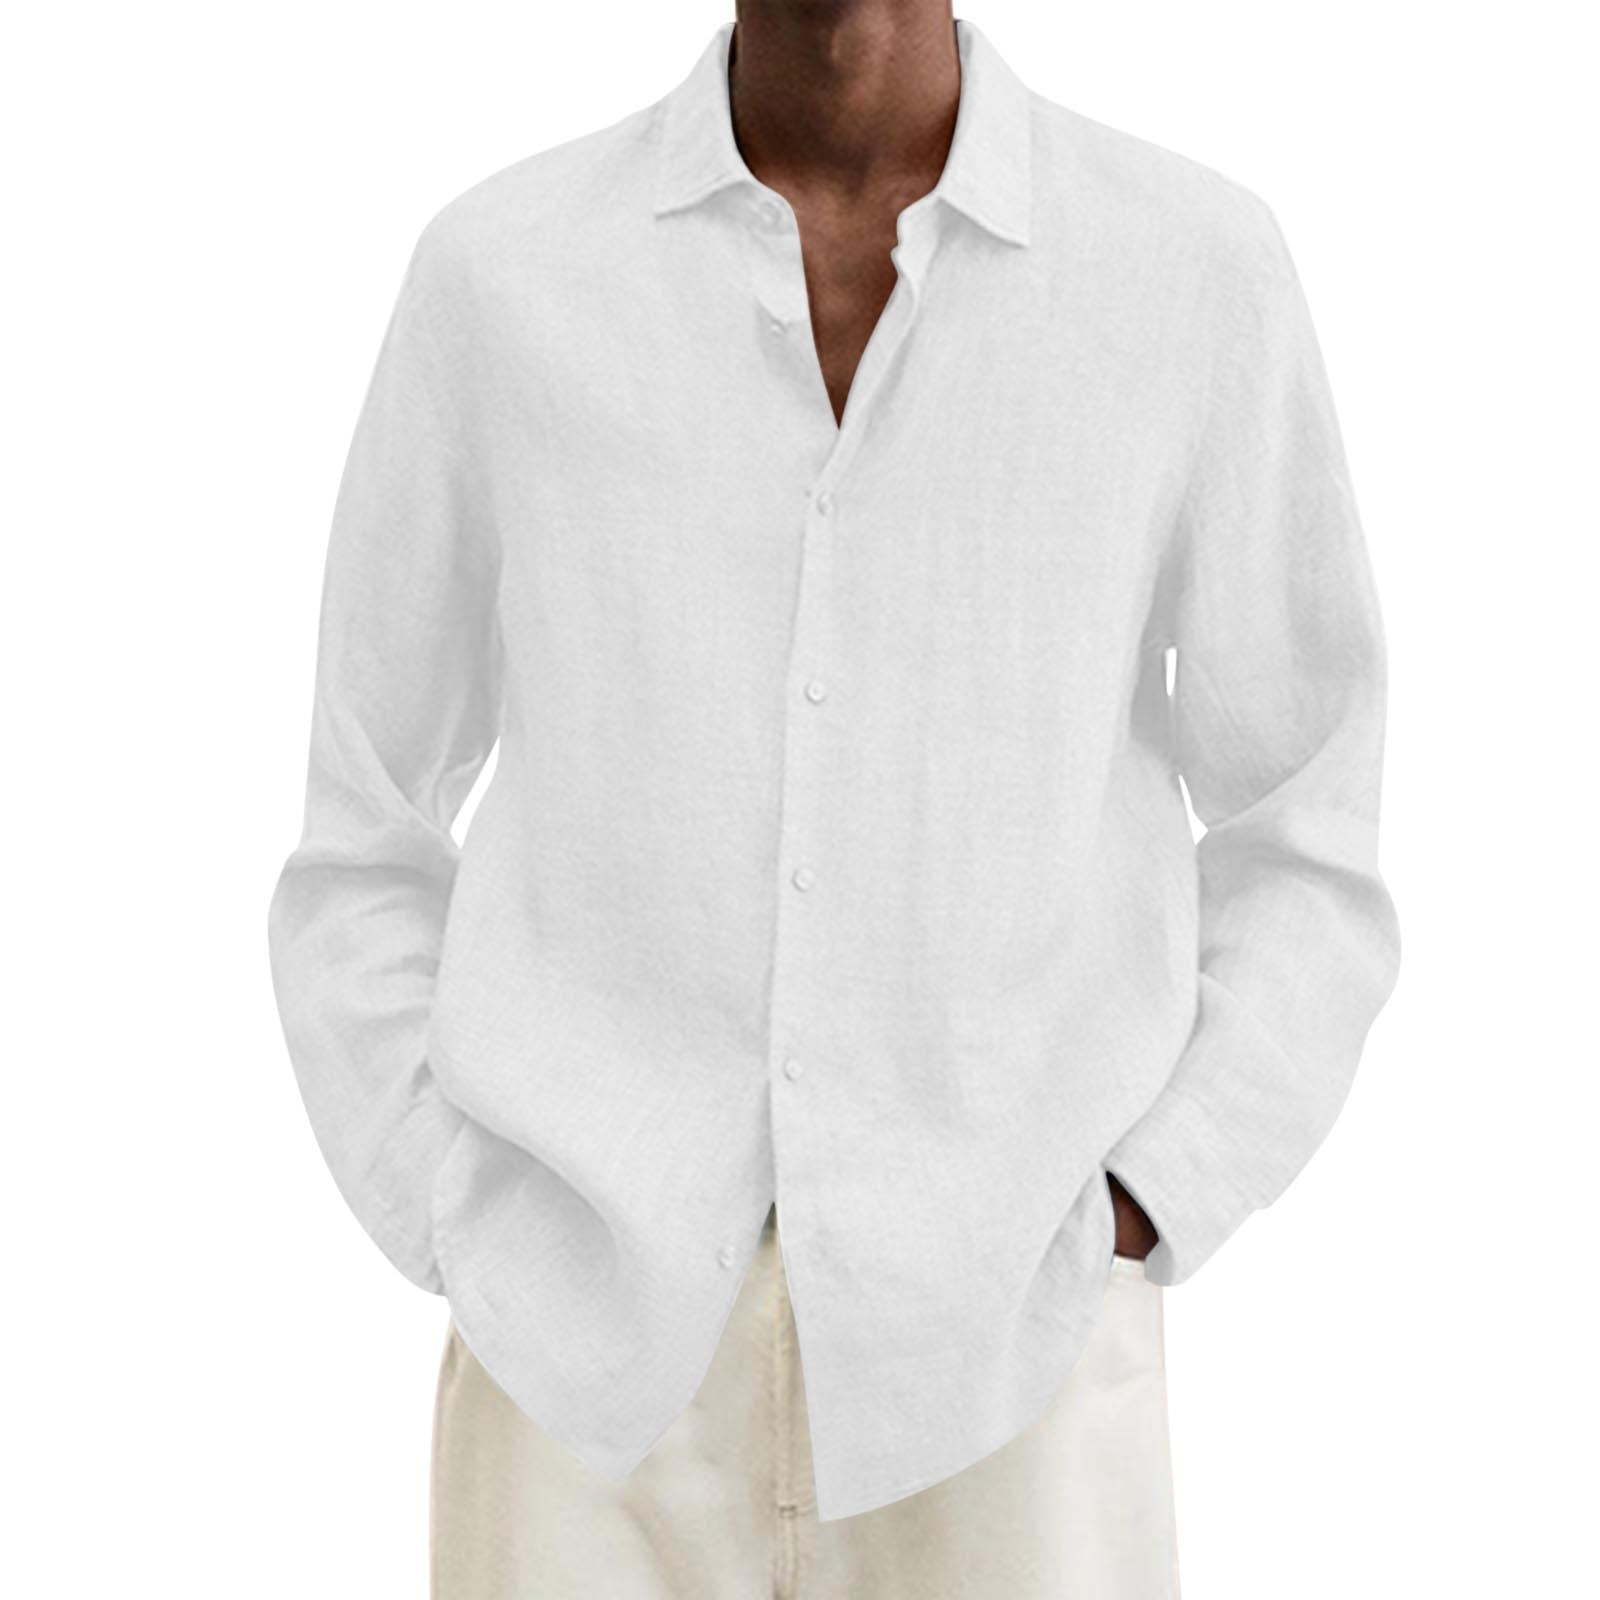 Odeerbi Clearance Men Shirt Long Sleeve Turndown Collar Blouse